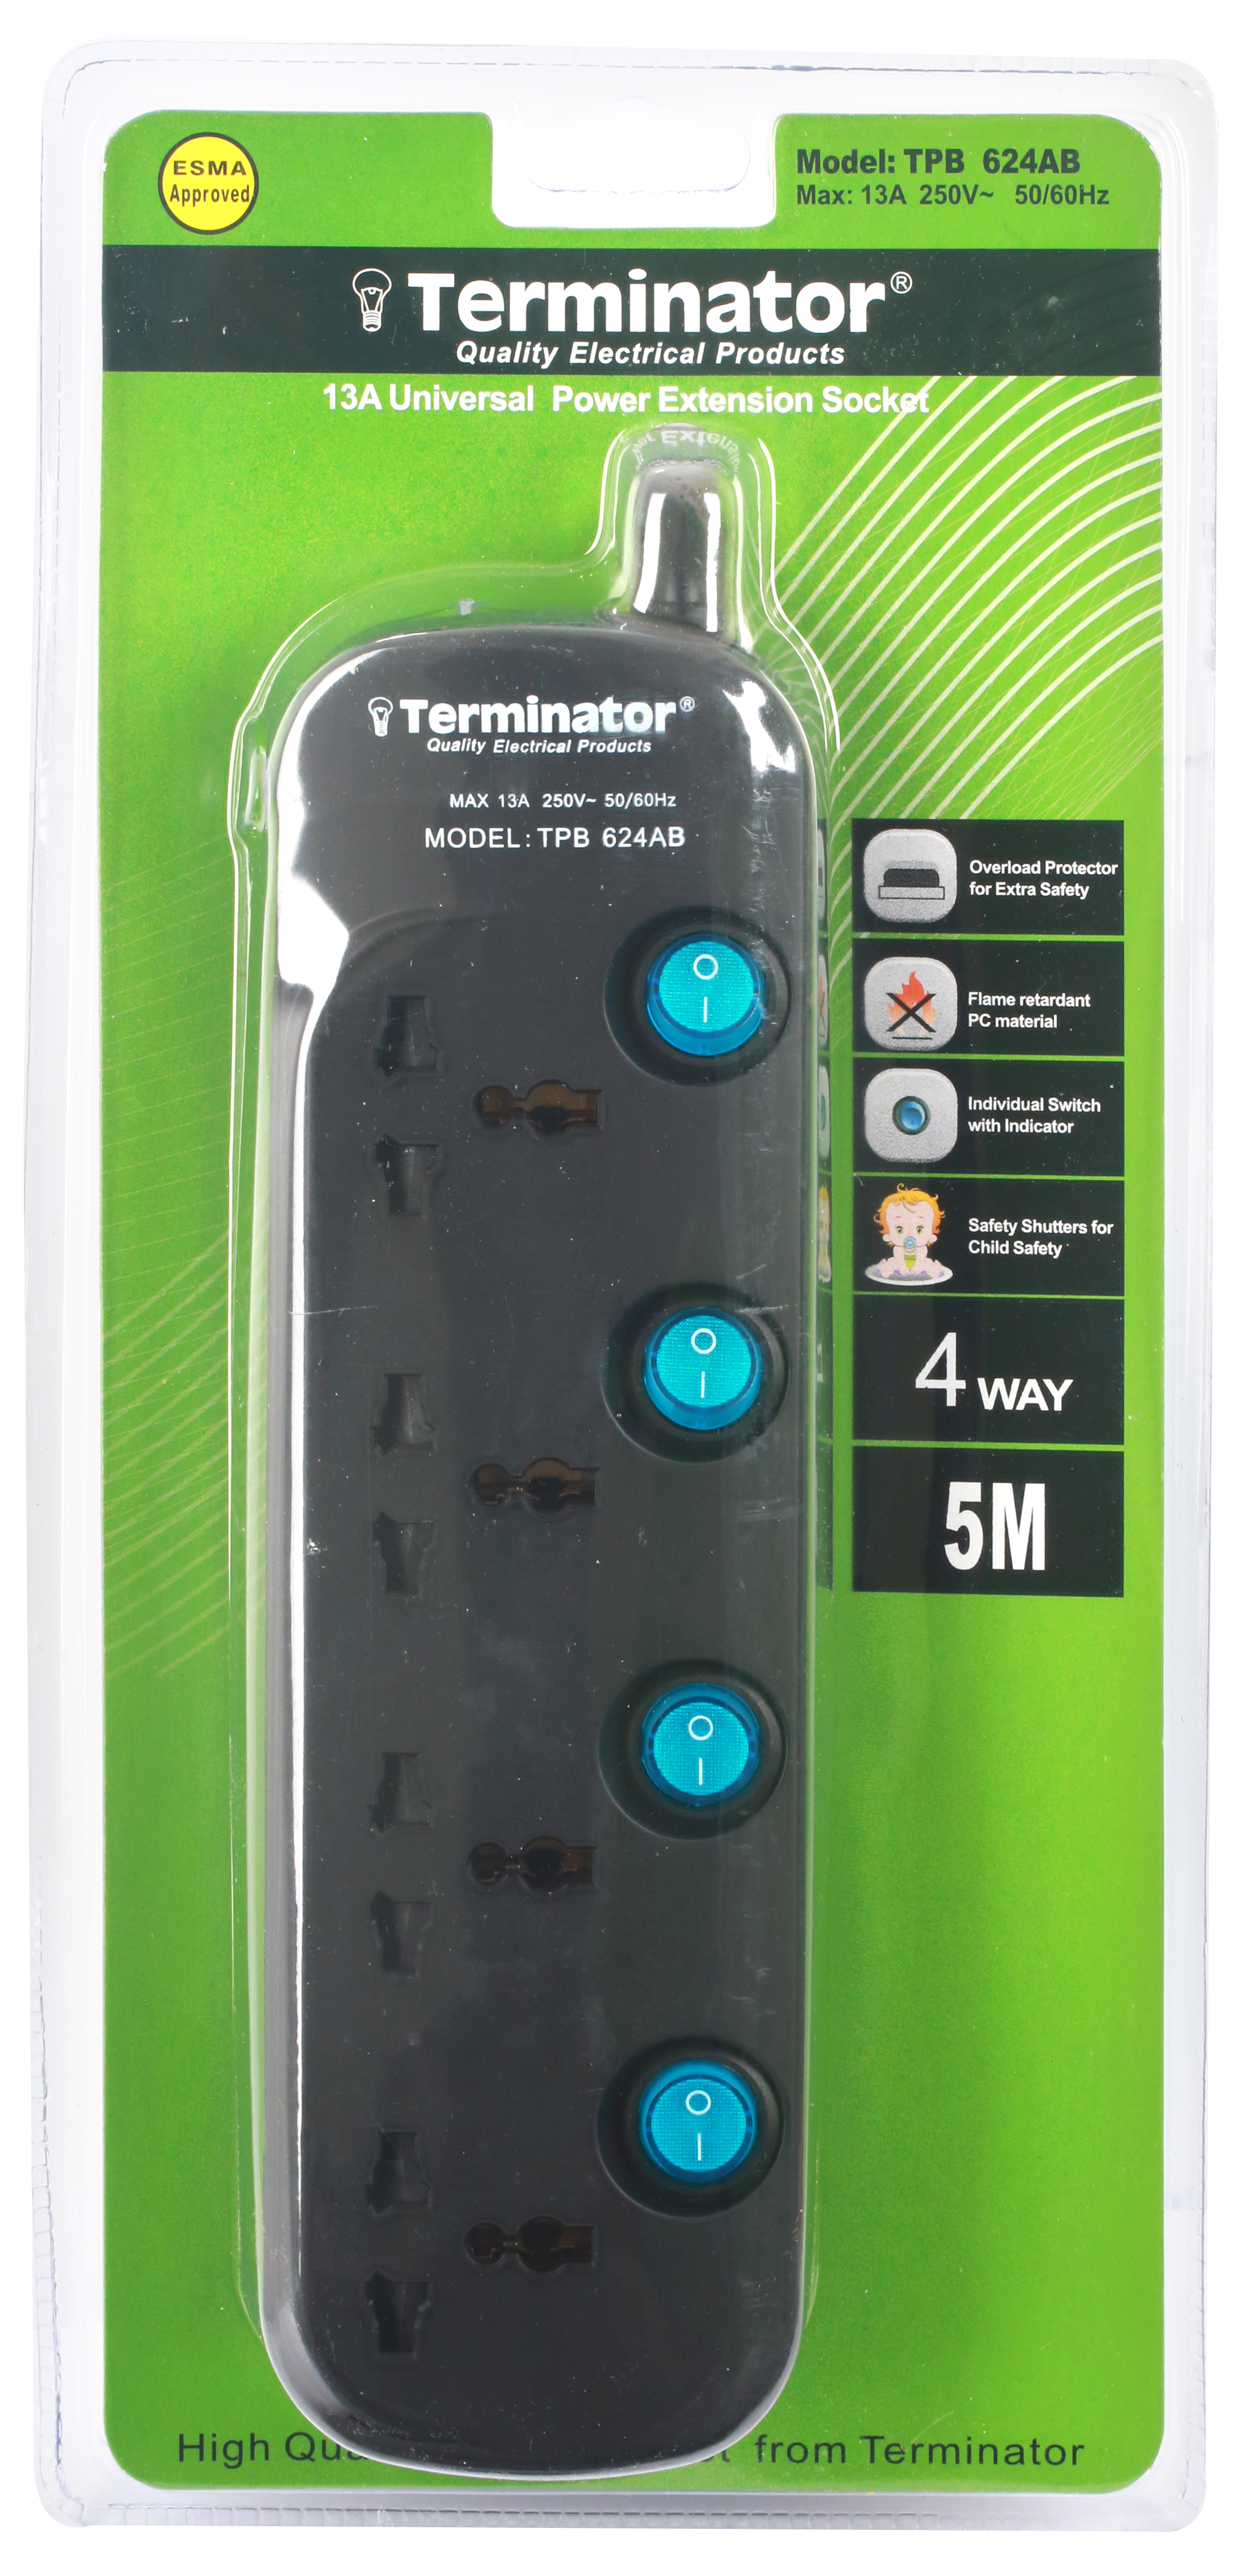 Terminator Brand Universal Power Extension Socket - 4 way 5M